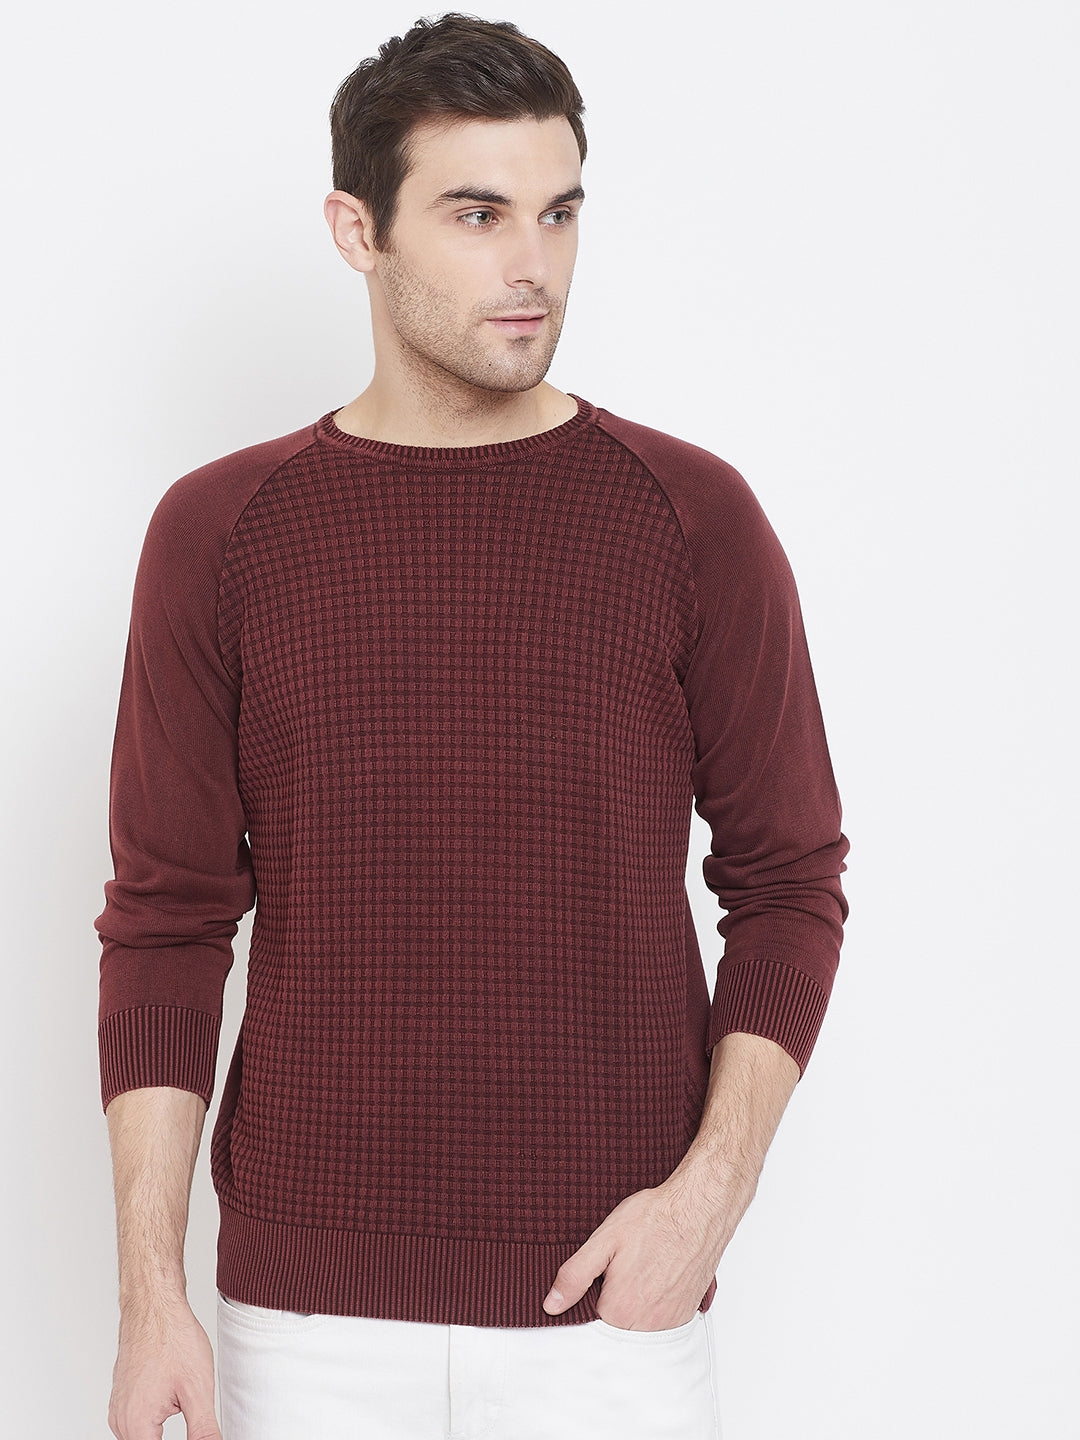 Maroon Self Design Round Neck Sweater - Men Sweaters